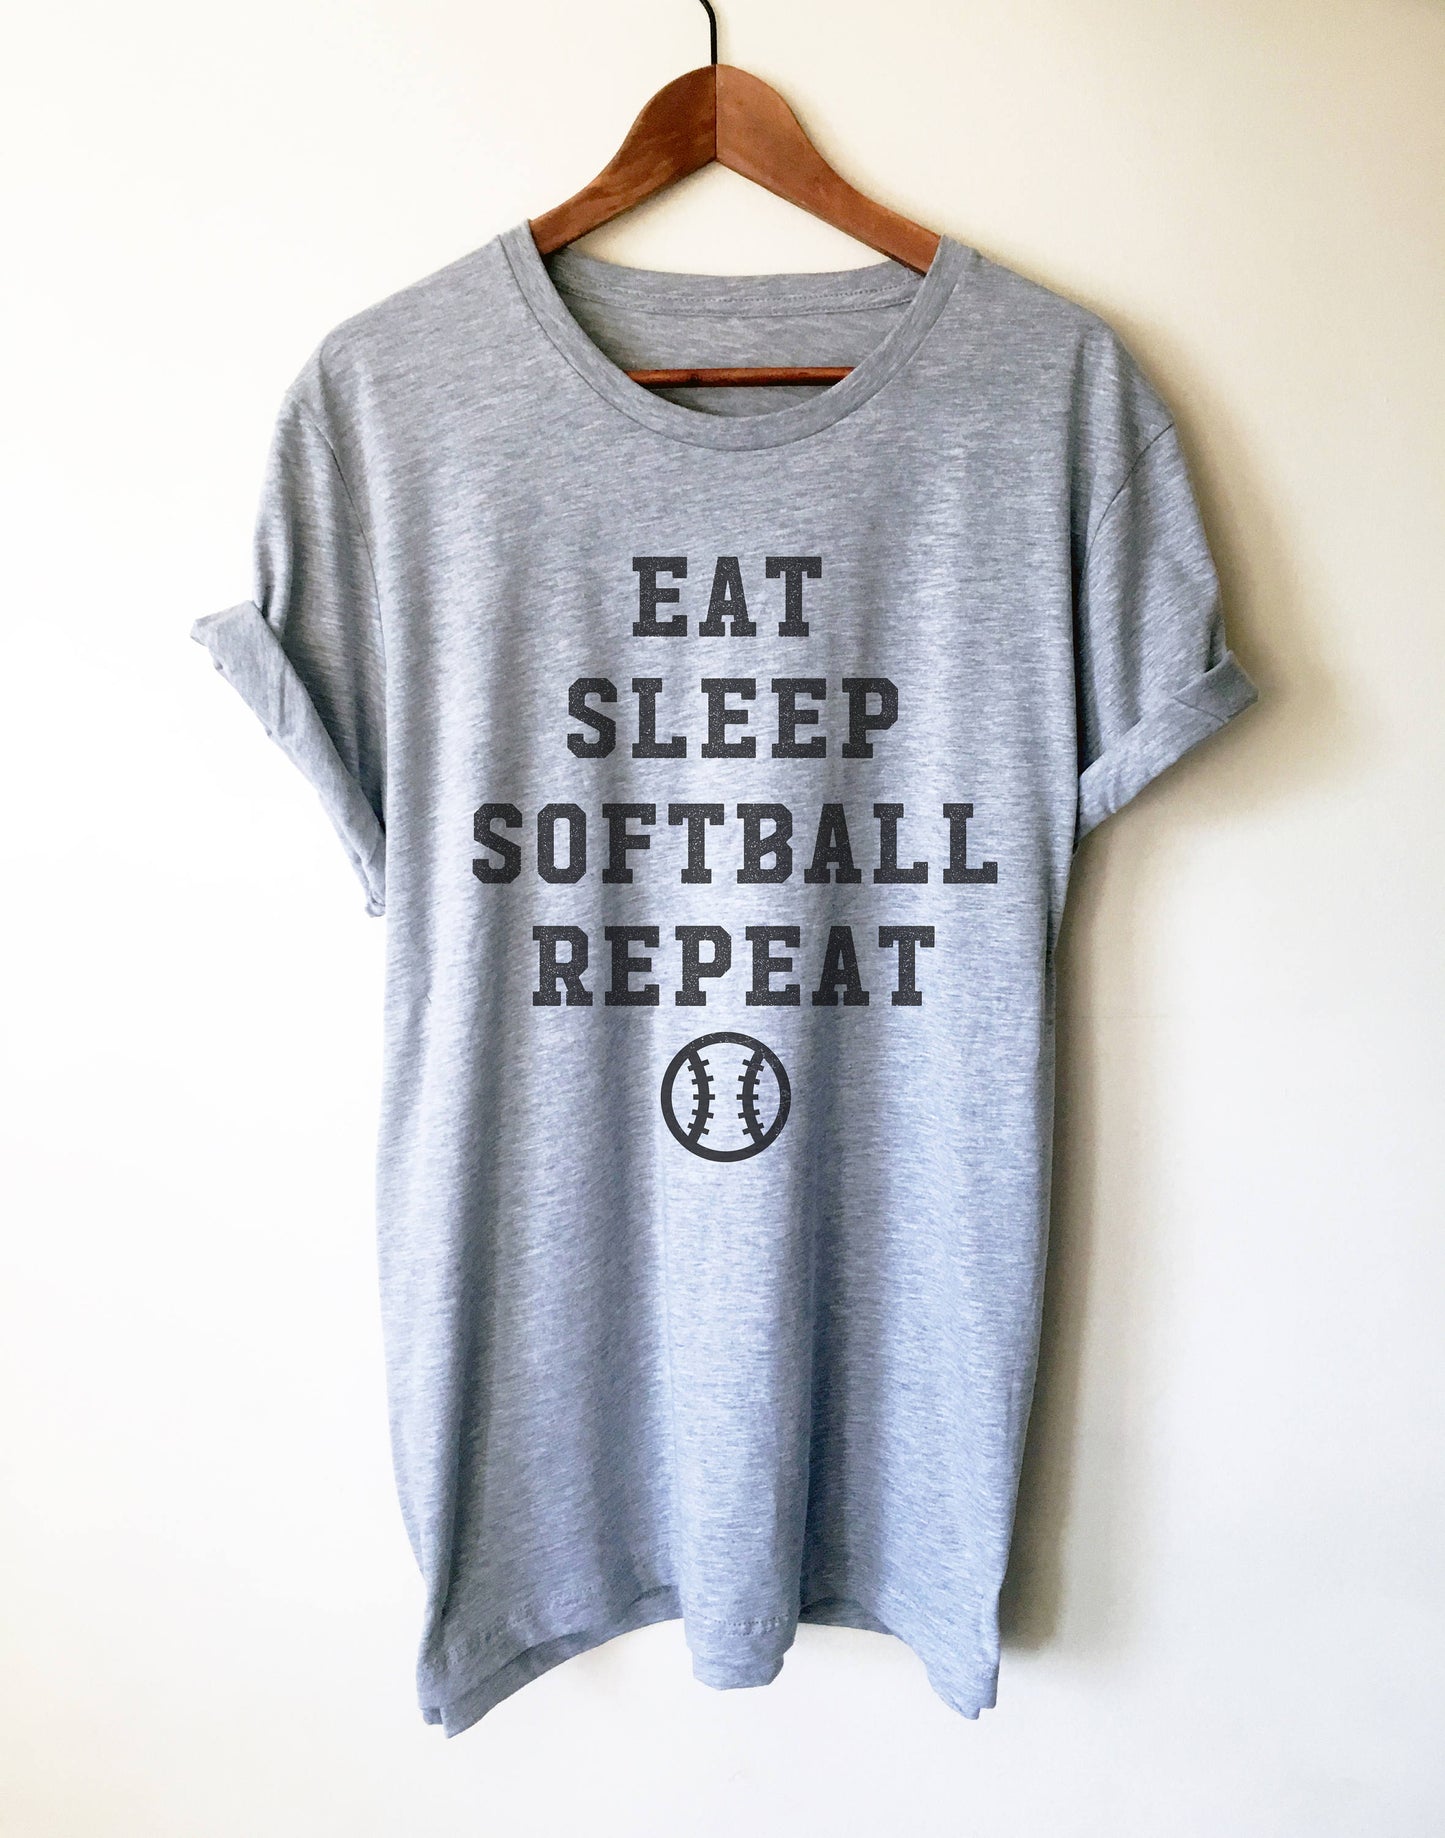 Eat Sleep Softball Repeat Unisex Shirt-Softball Life Gifts, Softball Mom Shirt, Team Softball Gift, Softball Coach Shirt, Softball Dad Gifts